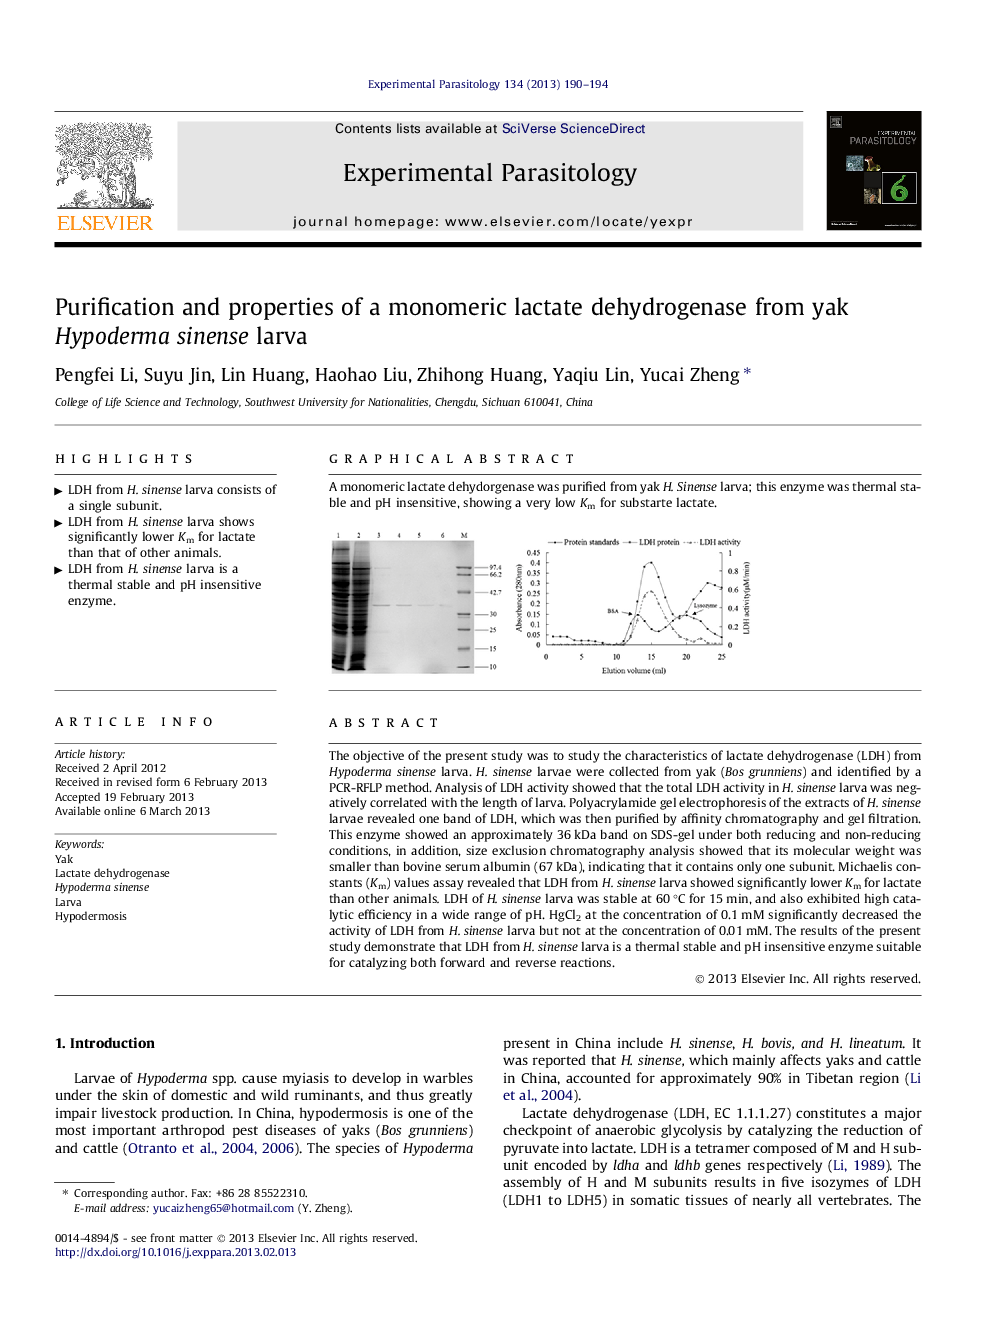 Purification and properties of a monomeric lactate dehydrogenase from yak Hypoderma sinense larva